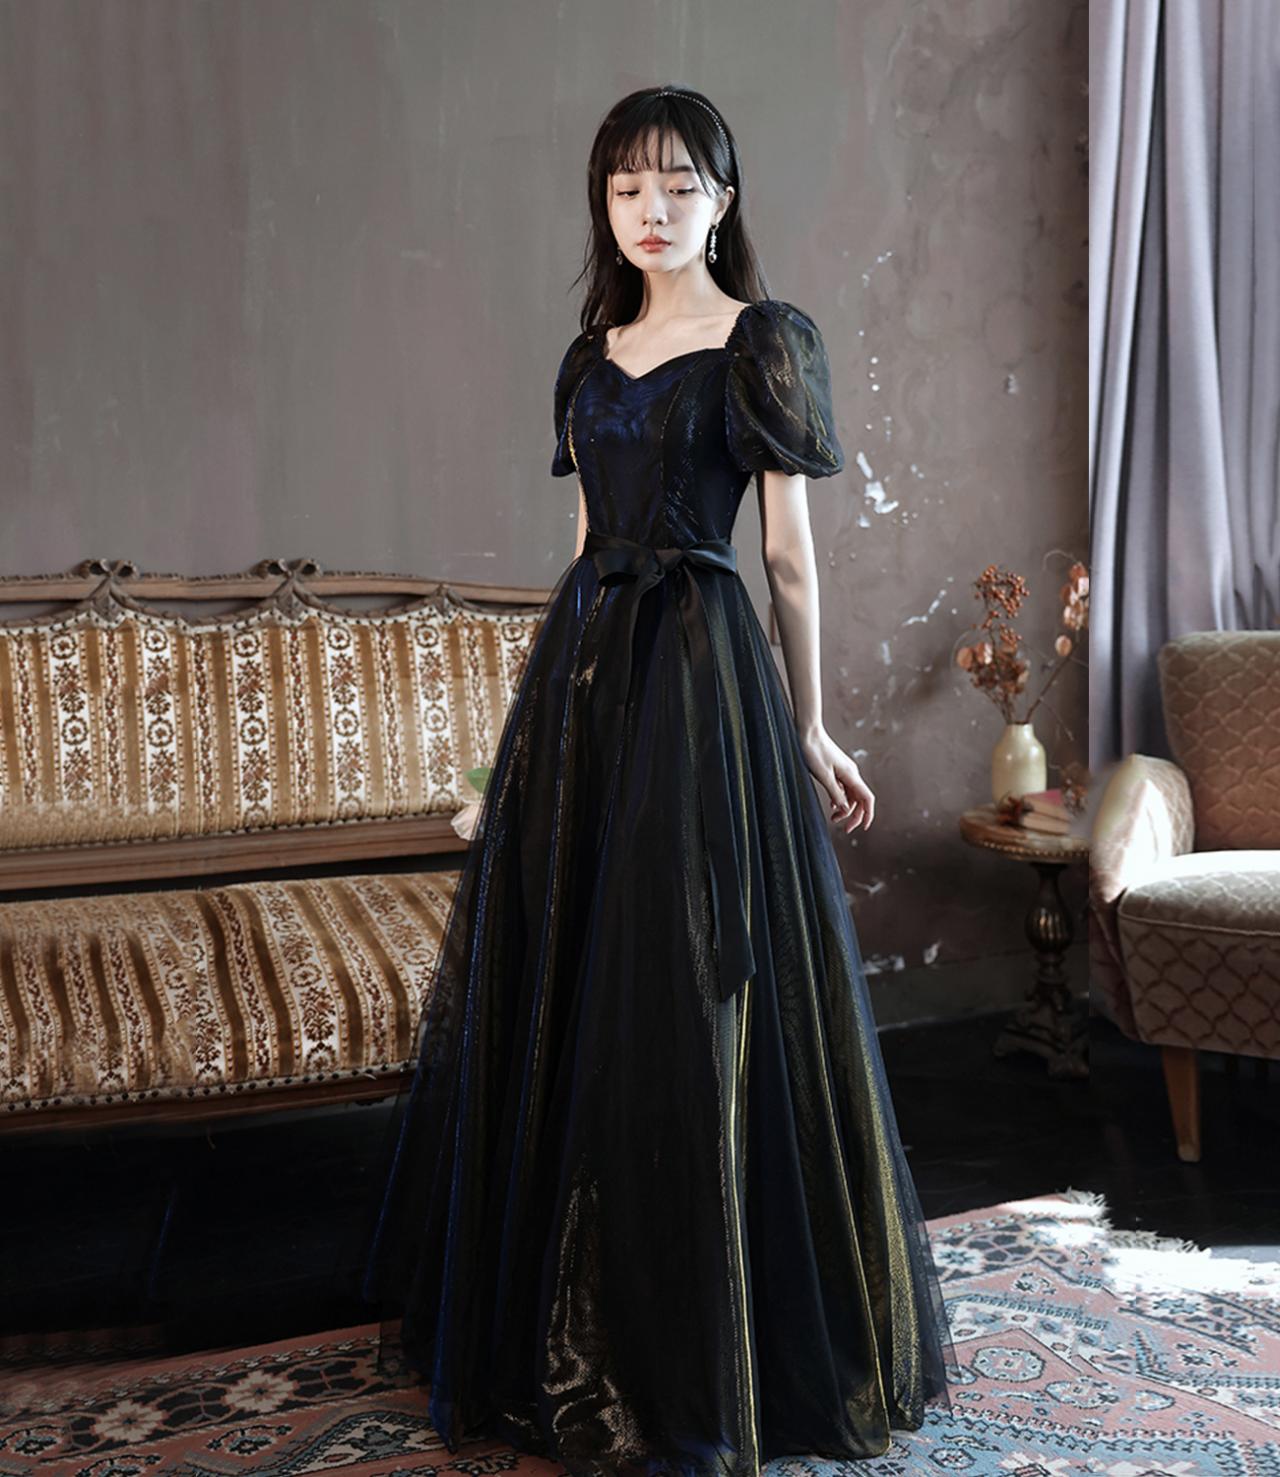 Black Tulle Long A Line Prom Dress Black Evening Dress